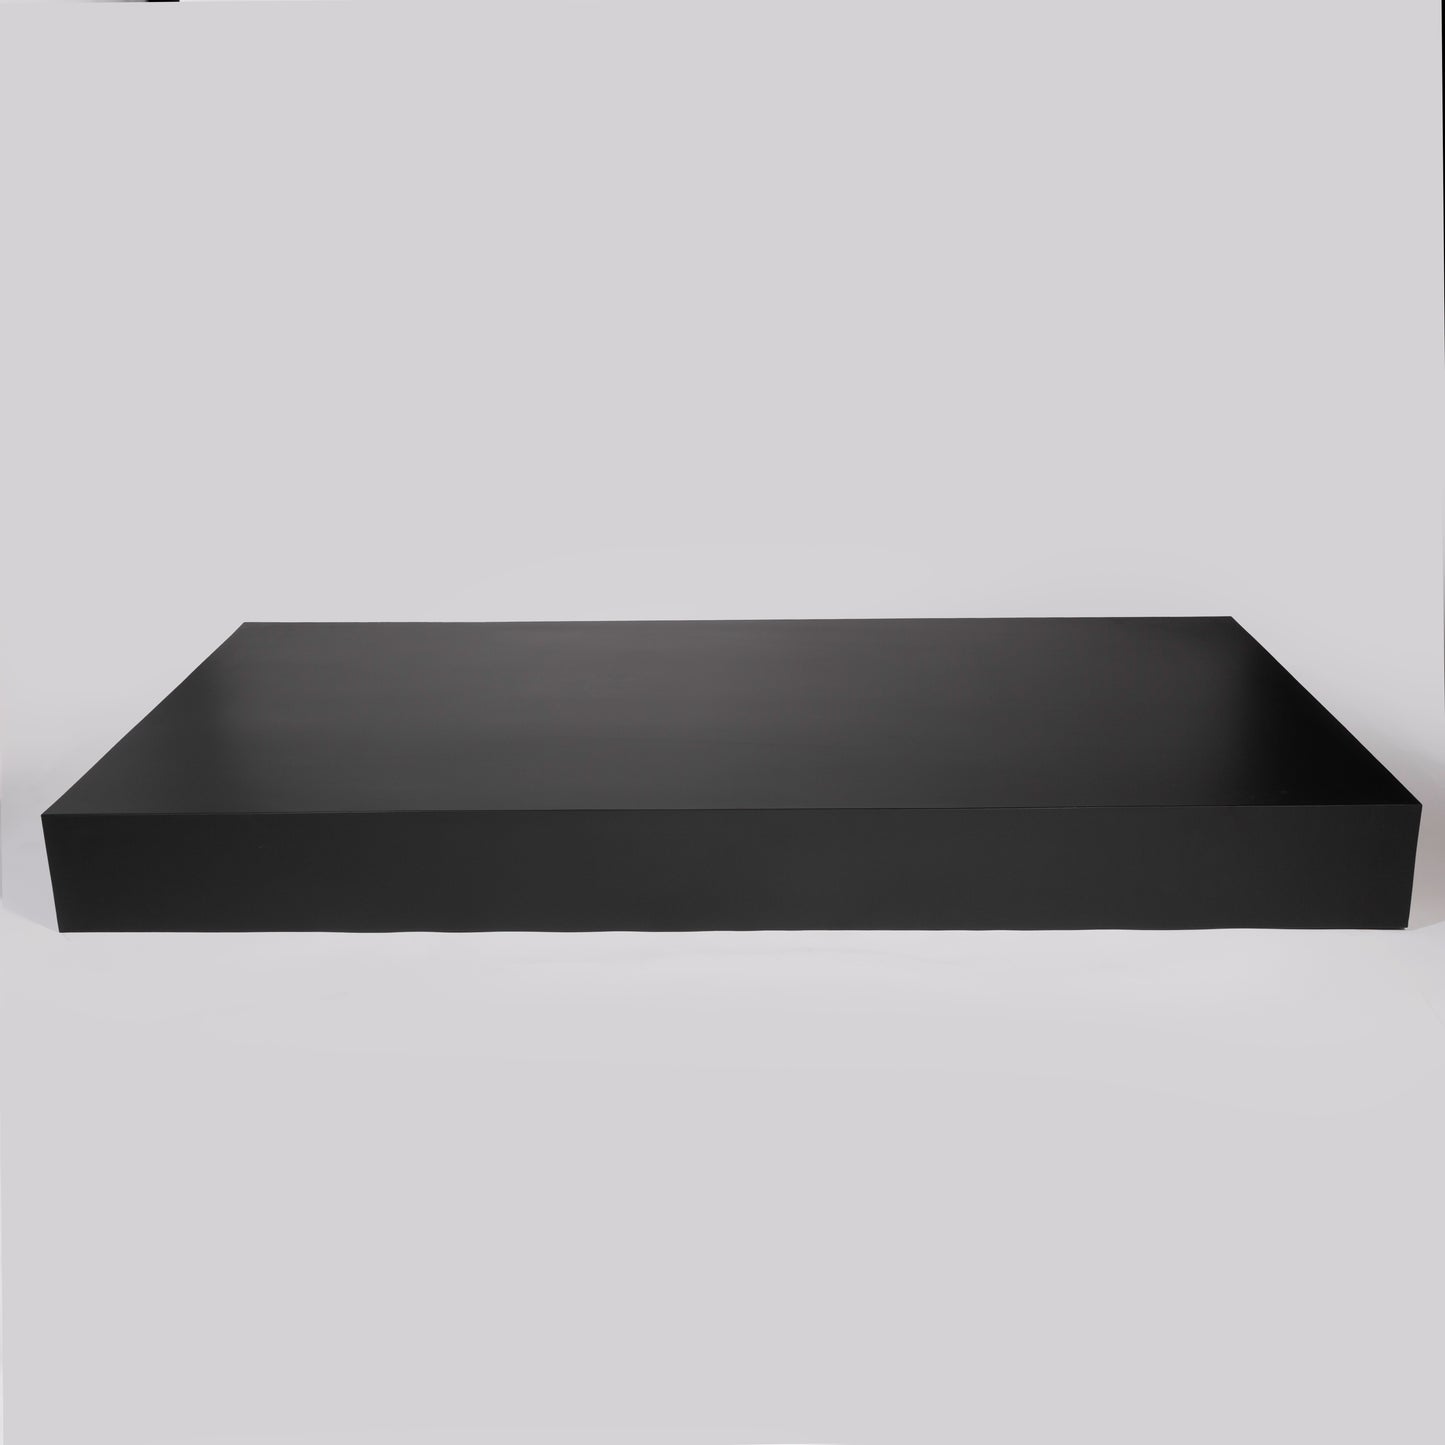 Black Box Coffee table - low profile